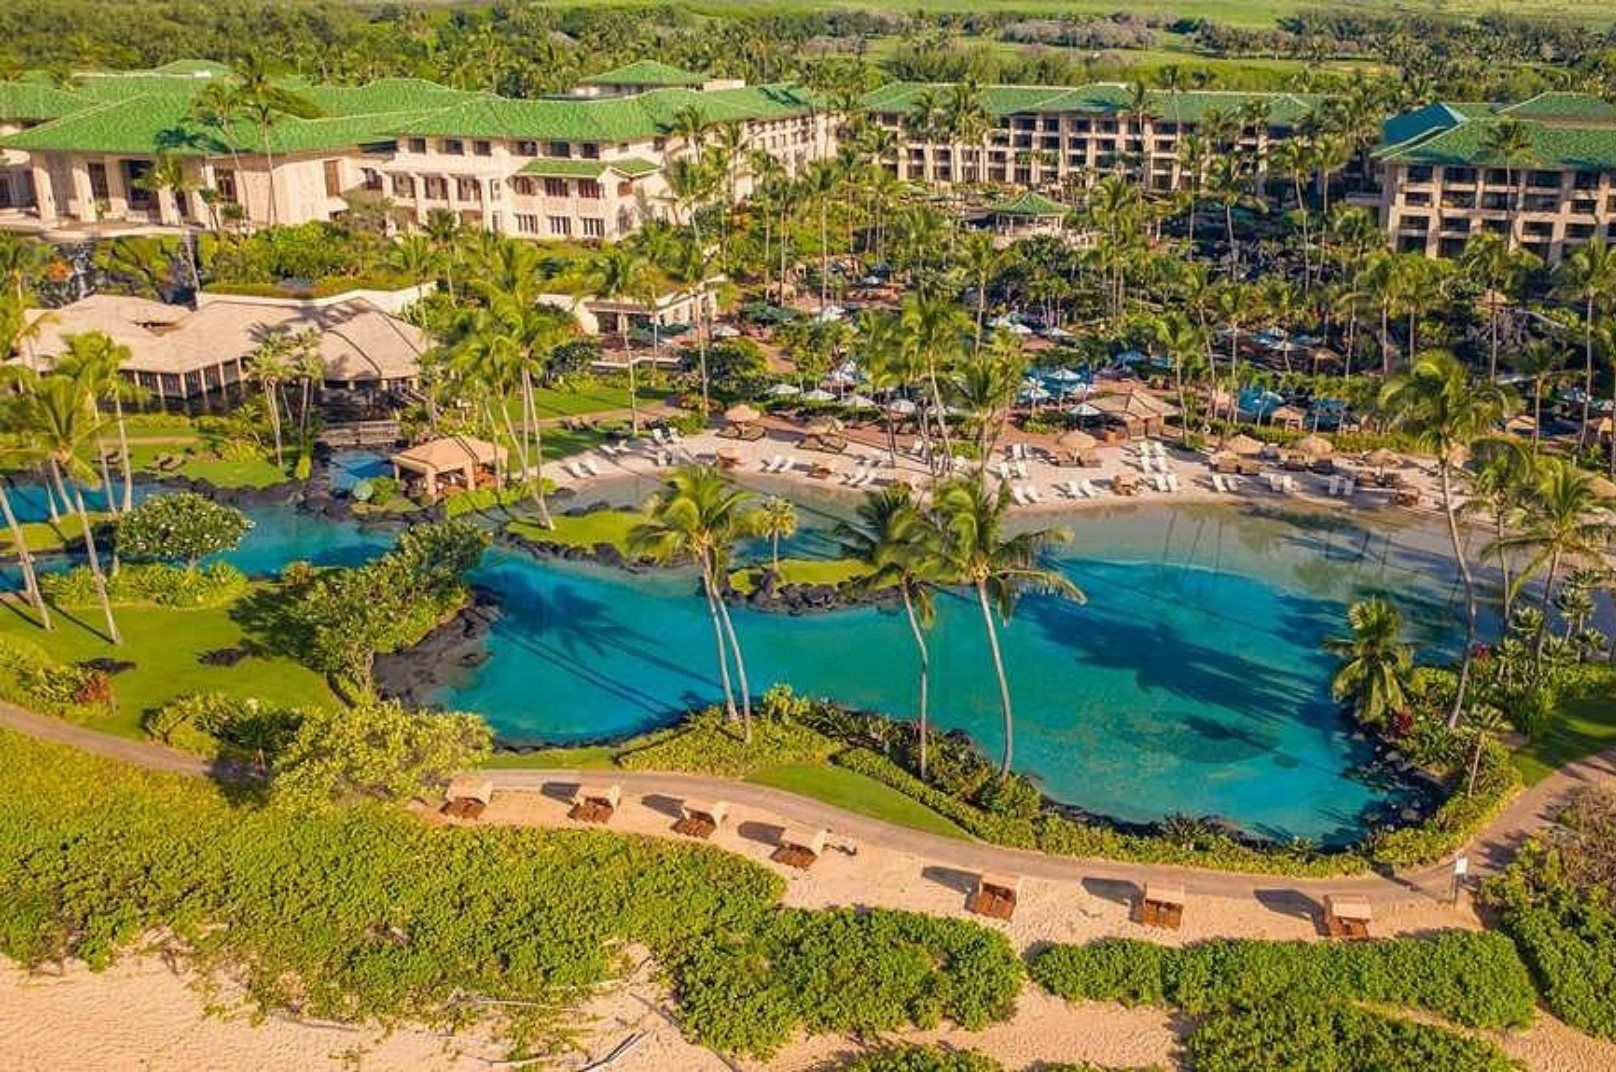 Top Hotels in Kauai